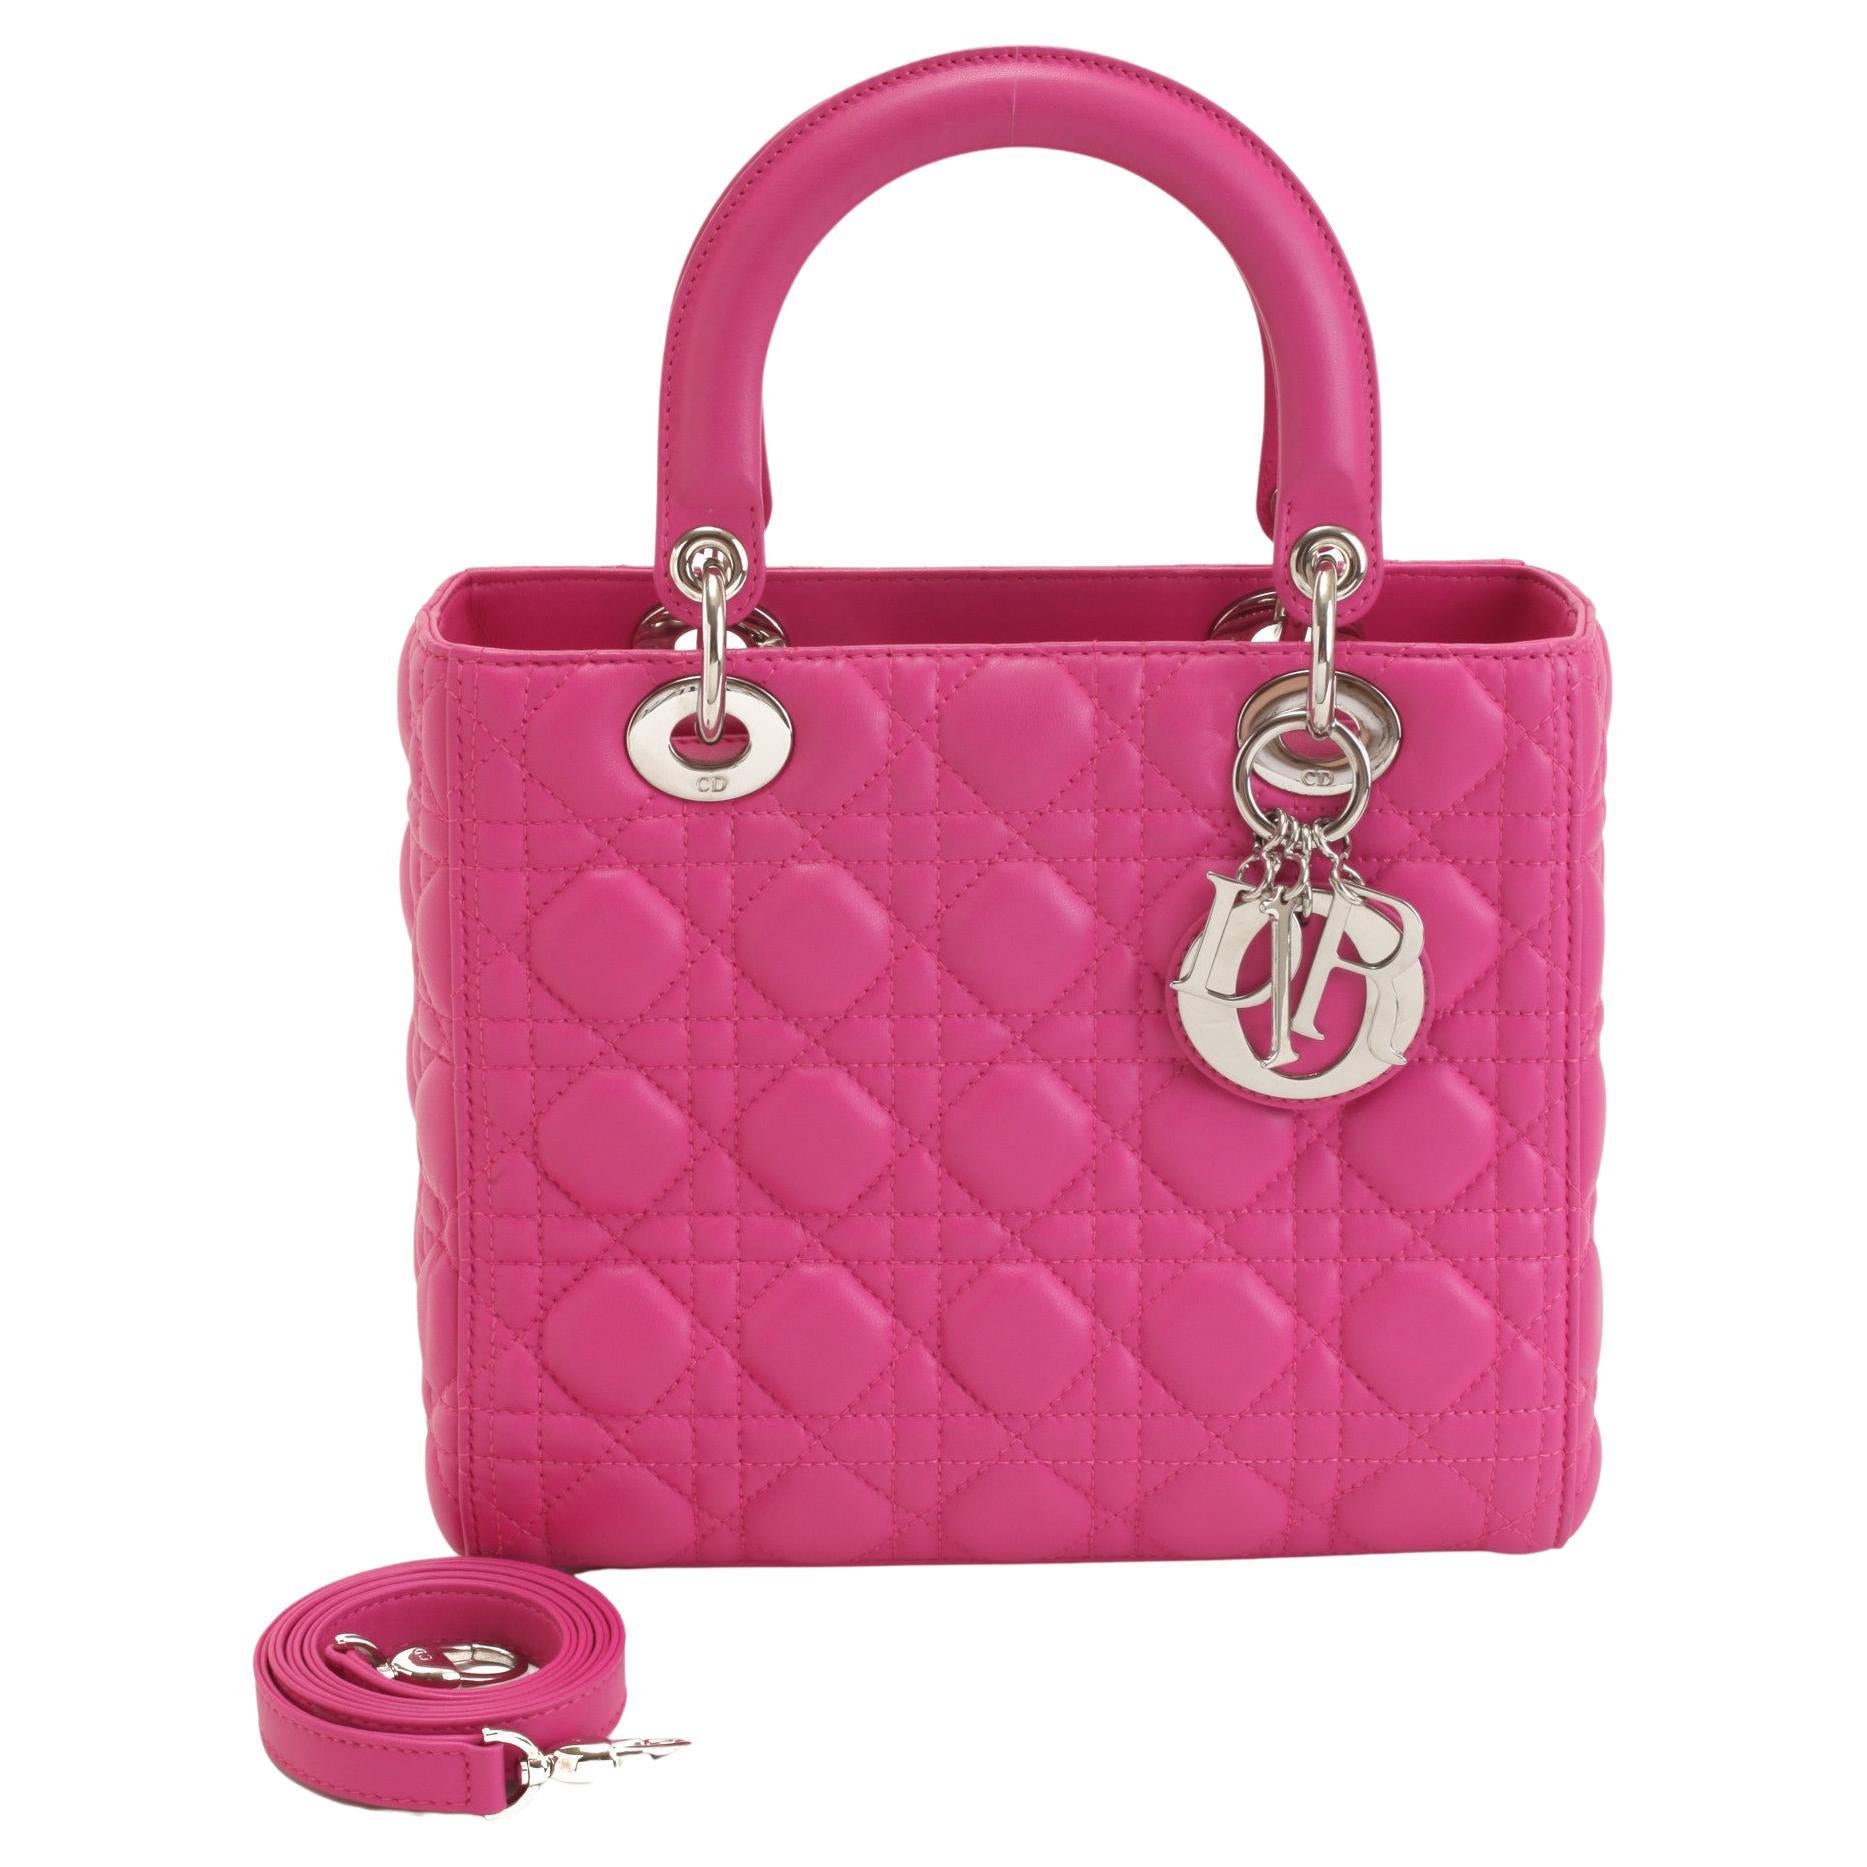 Christian Dior Pink Bag luxury vintage bags for sale